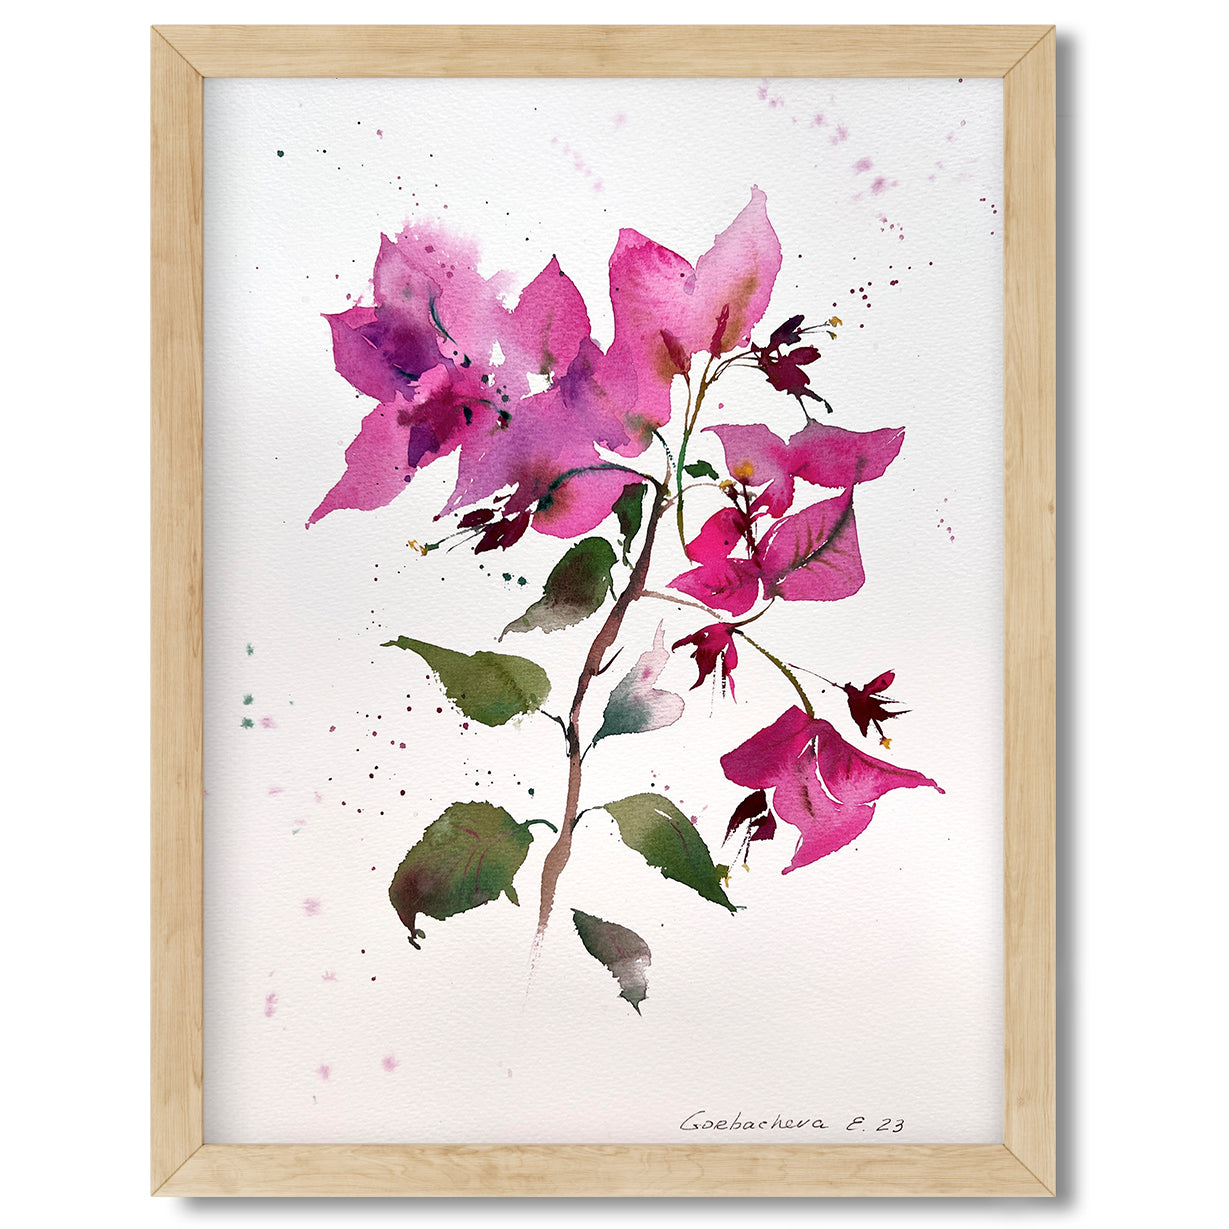 Bougainvillea Painting Original, Watercolor Flower Artwork, Pink Flowers, Botanical Wall Art, Gift, Living Room Decor